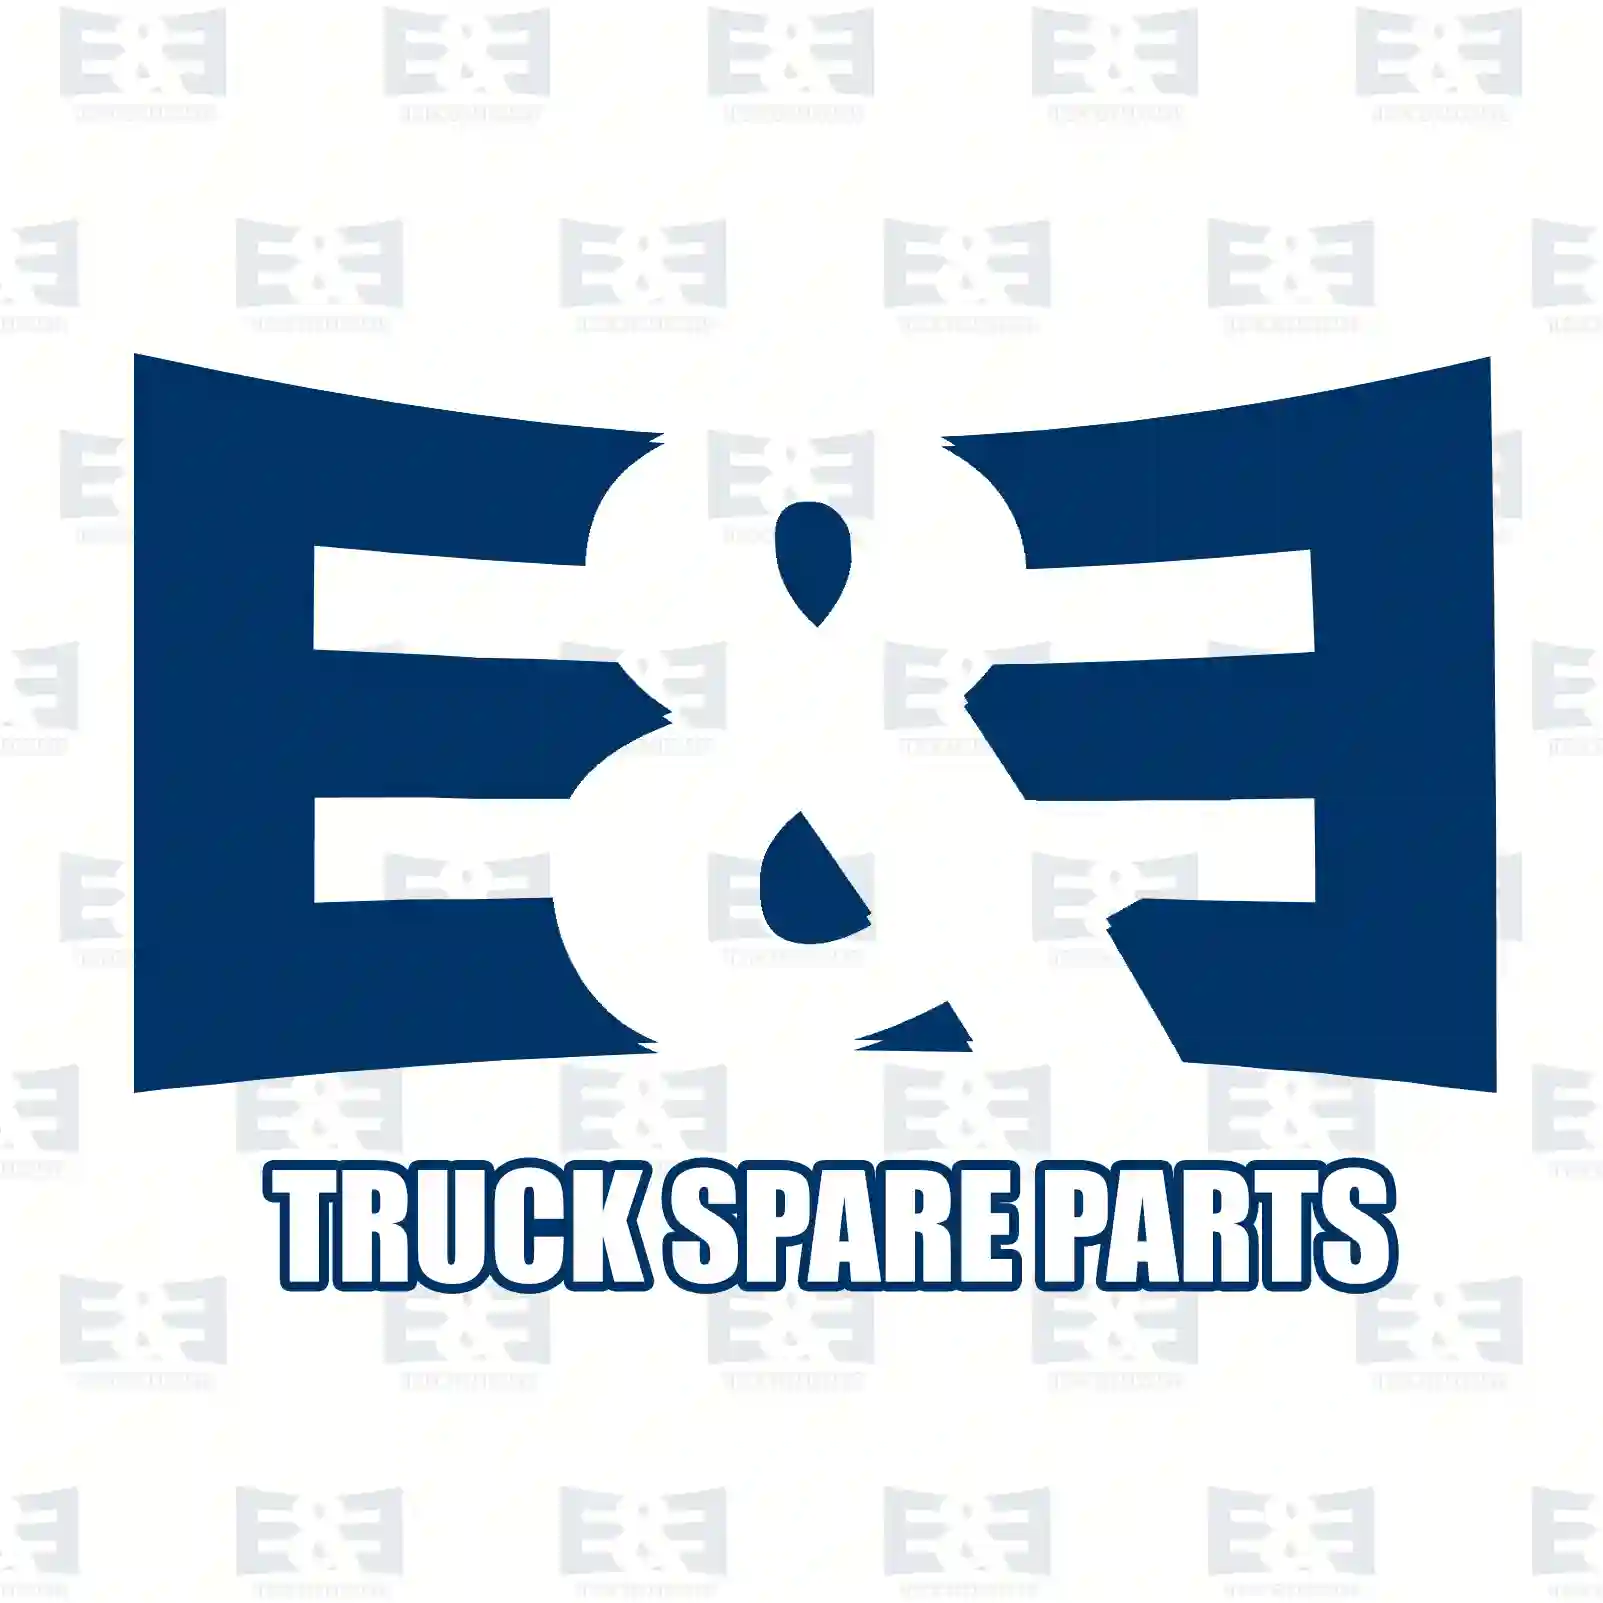 Disc brake pad kit, 2E2297484, 425224, 425455, 09948626, 77362235, 425224, 425455 ||  2E2297484 E&E Truck Spare Parts | Truck Spare Parts, Auotomotive Spare Parts Disc brake pad kit, 2E2297484, 425224, 425455, 09948626, 77362235, 425224, 425455 ||  2E2297484 E&E Truck Spare Parts | Truck Spare Parts, Auotomotive Spare Parts